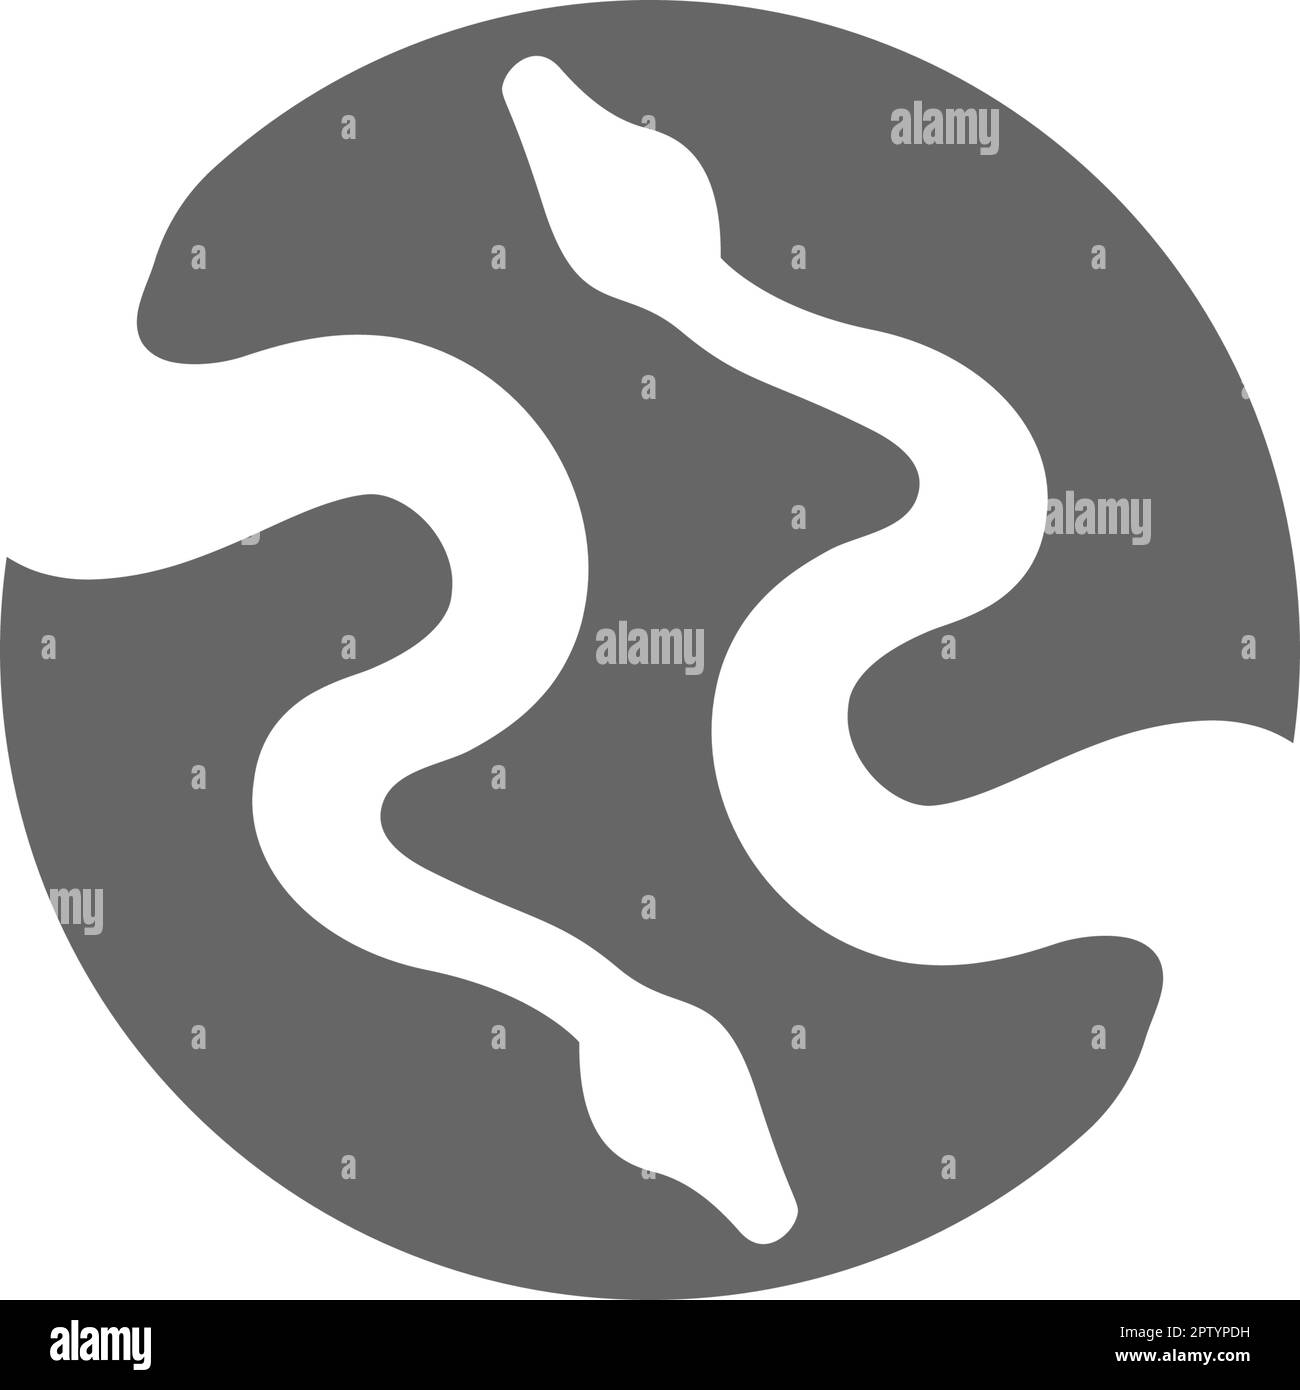 Python logo icon design illustration Stock Vector